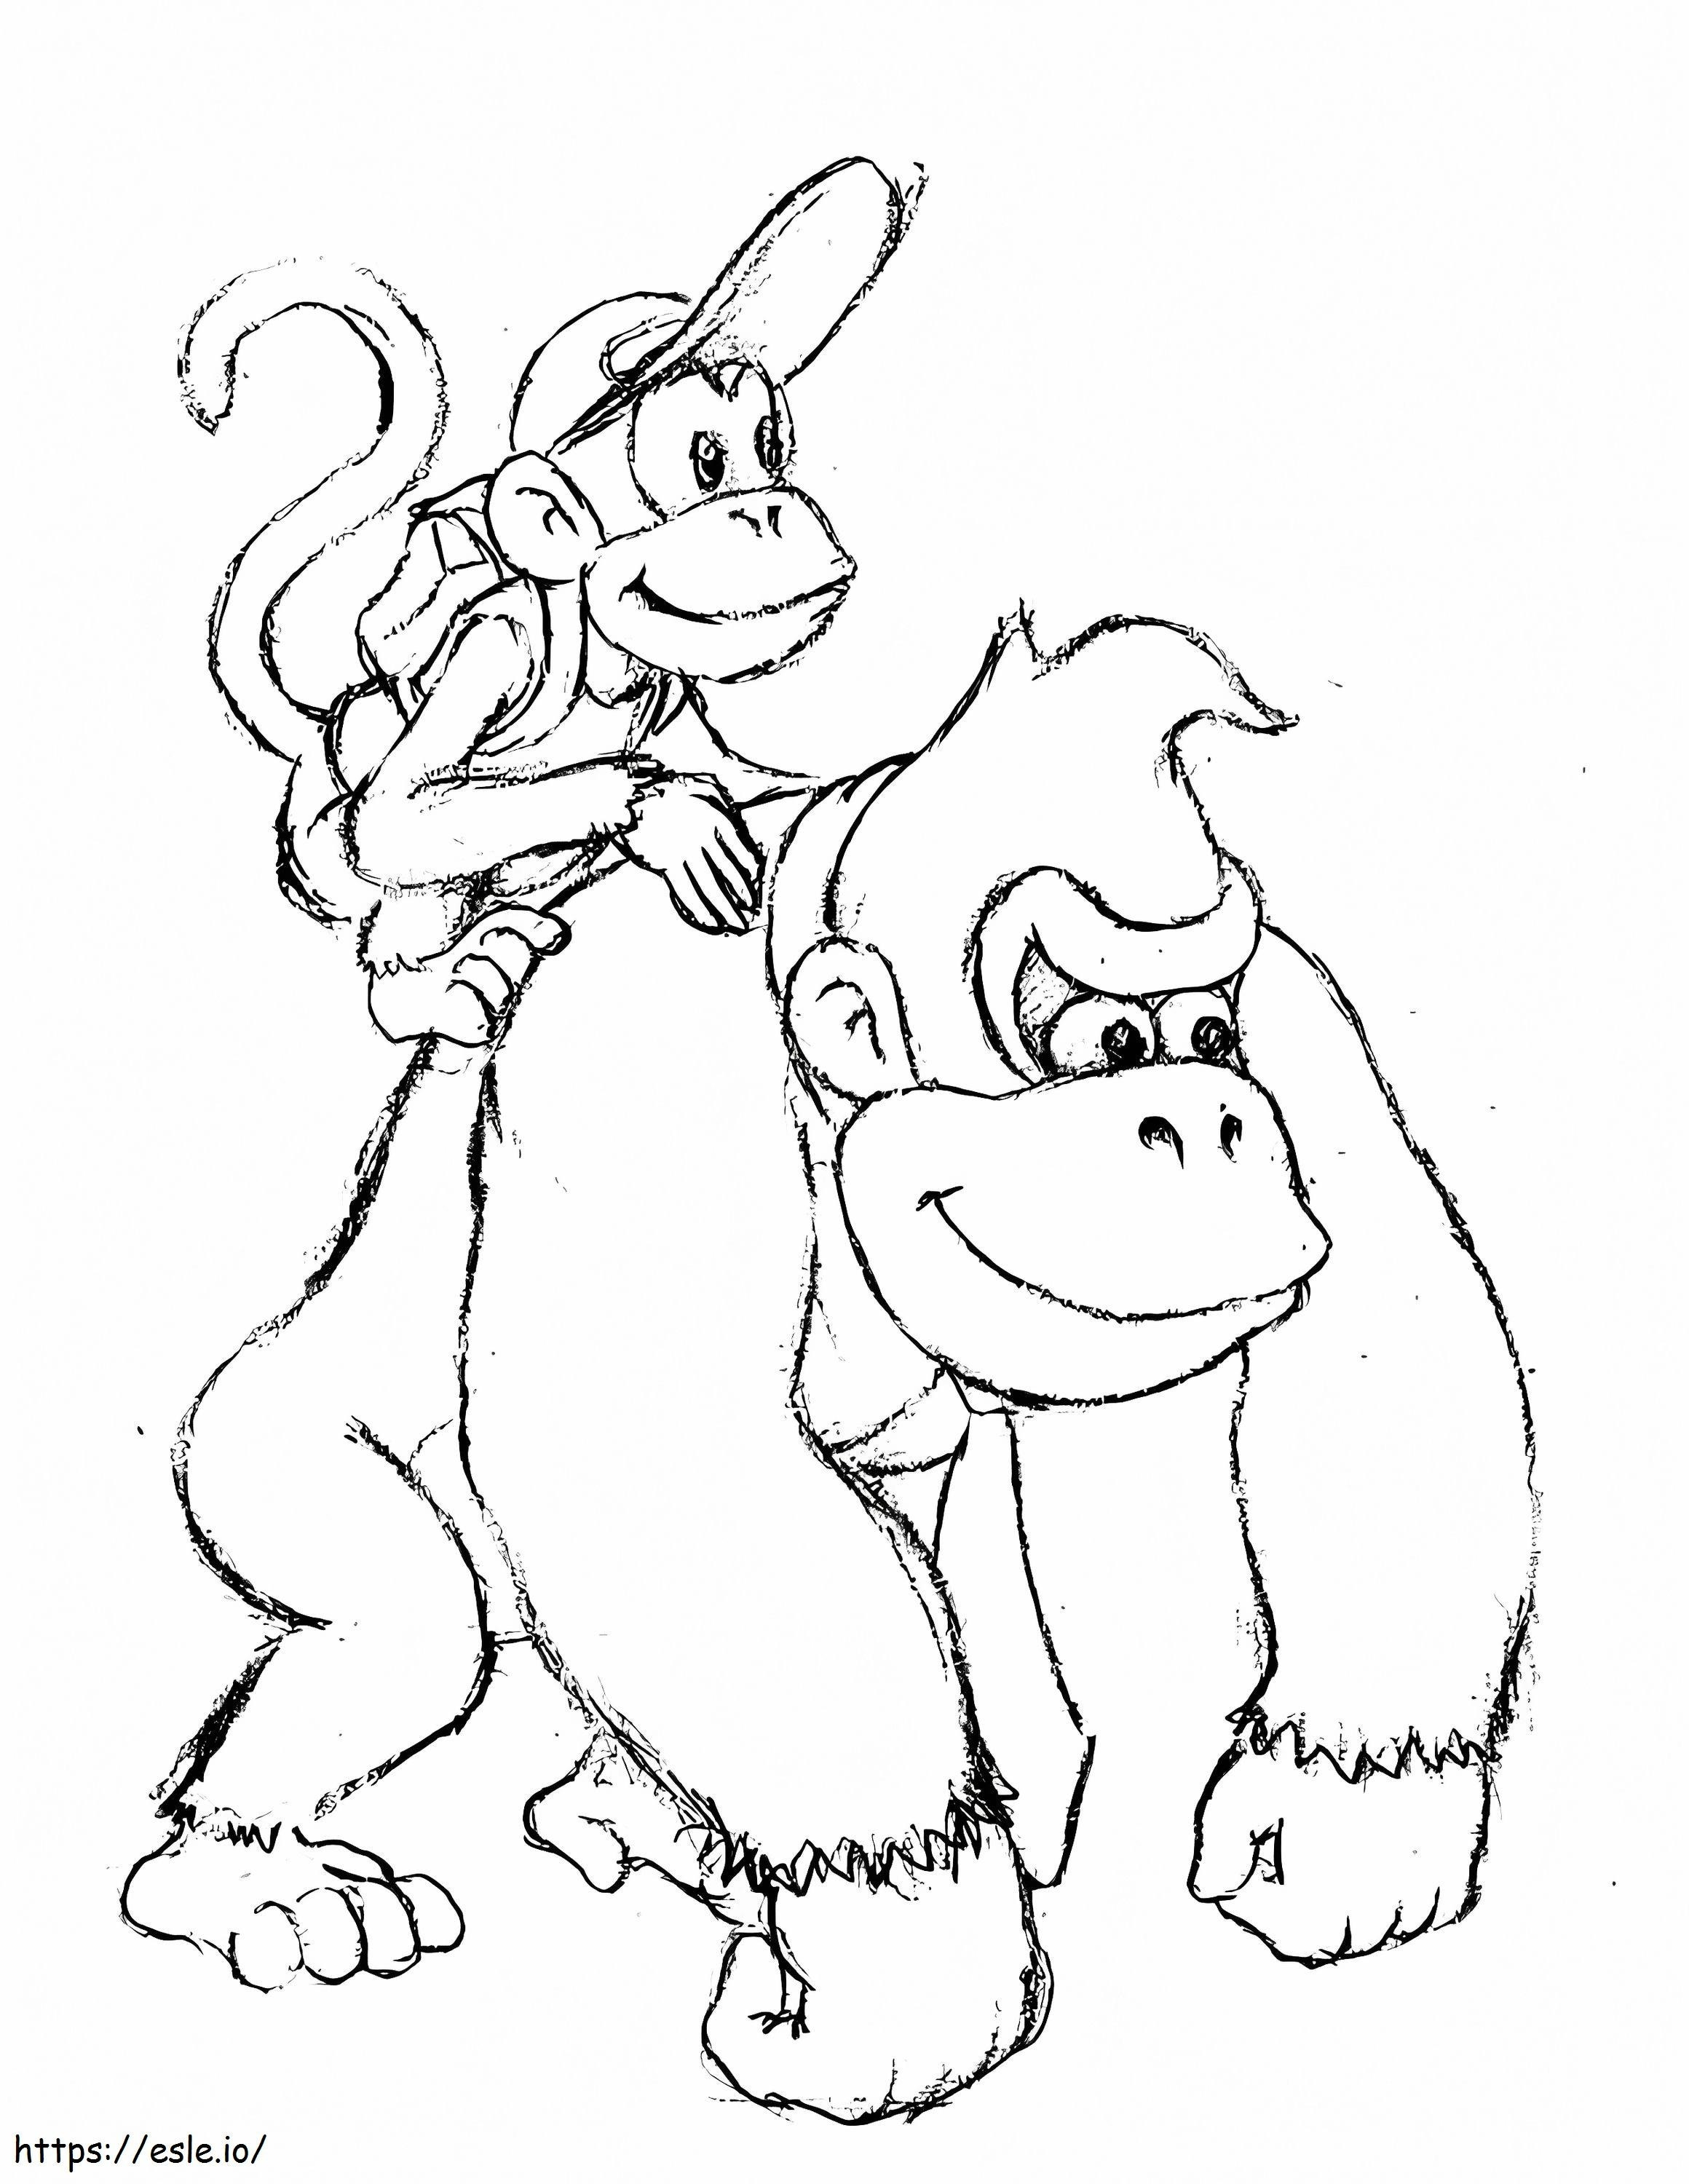 Diddy Kong Umschlag Donkey Kong ausmalbilder